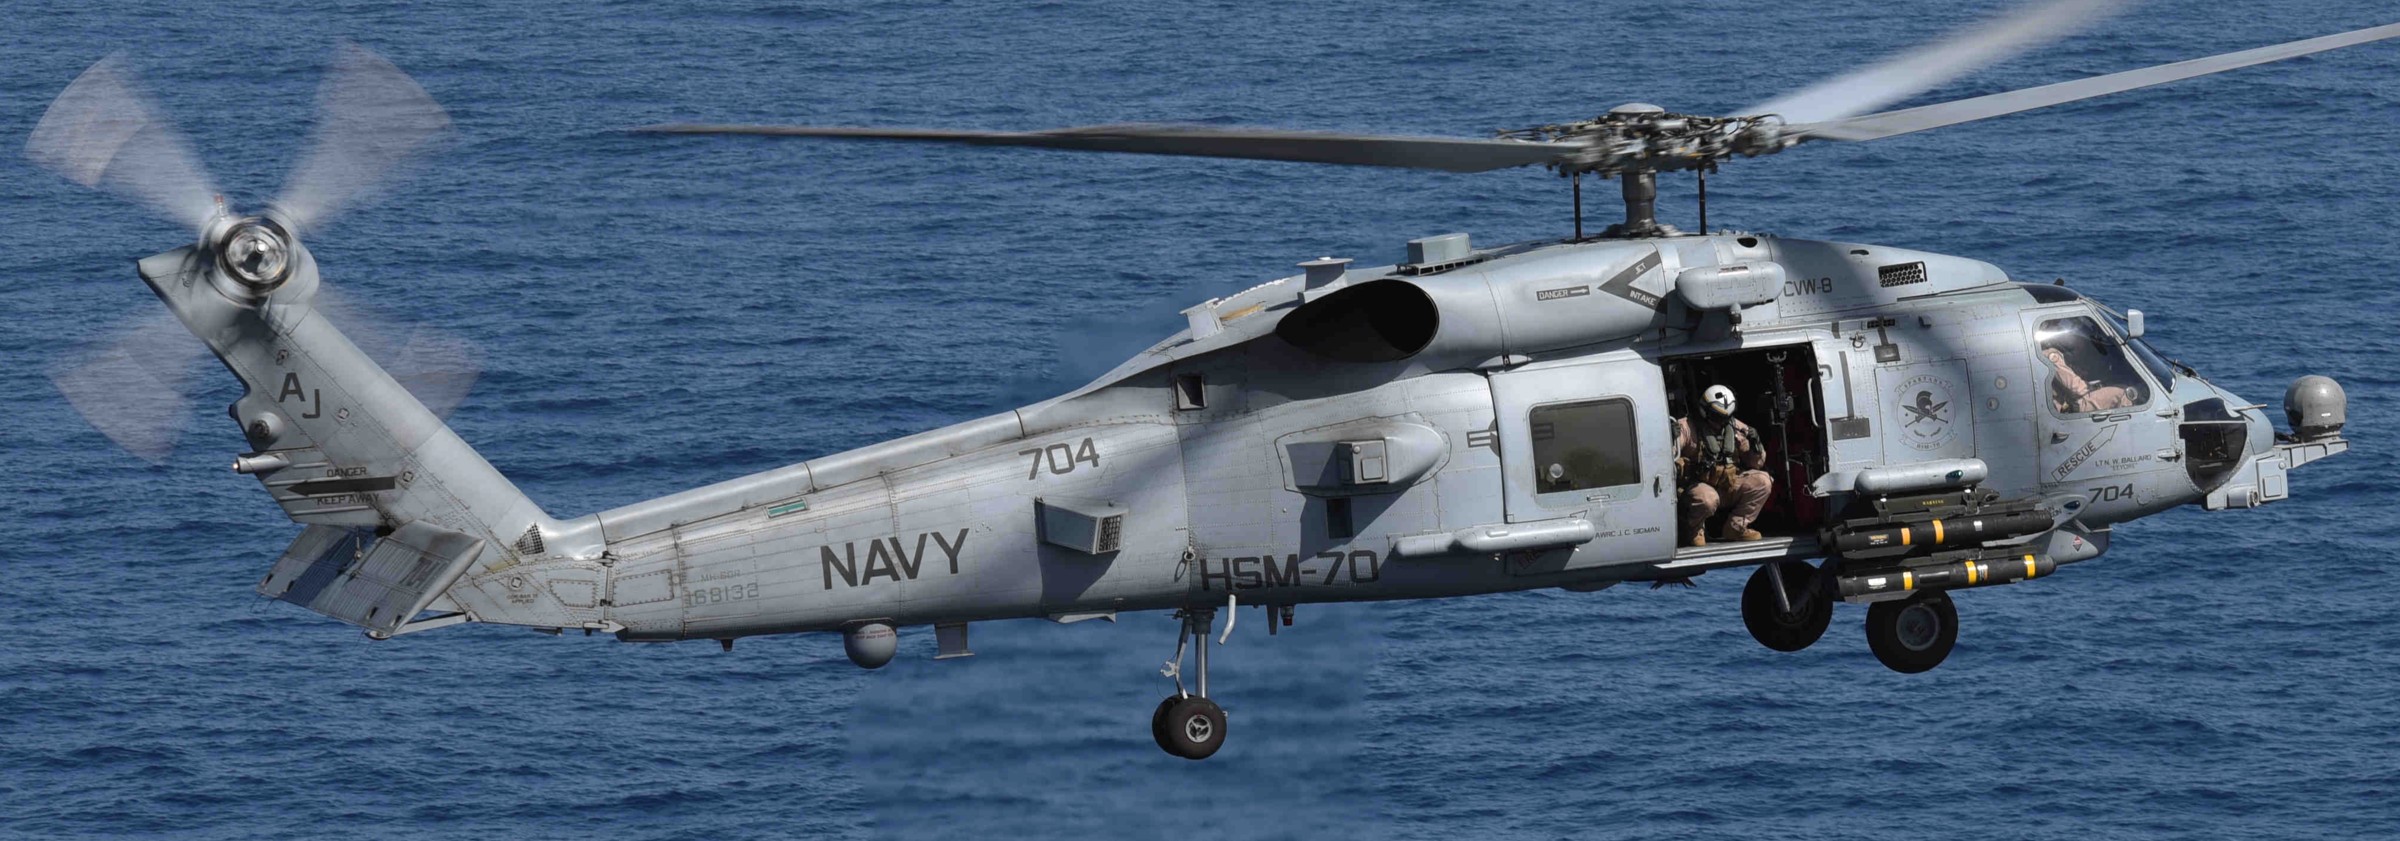 hsm-70 spartans helicopter maritime strike squadron mh-60r seahawk 2016 75 uss george h. w. bush cvn-77 carrier air wing cvw-8